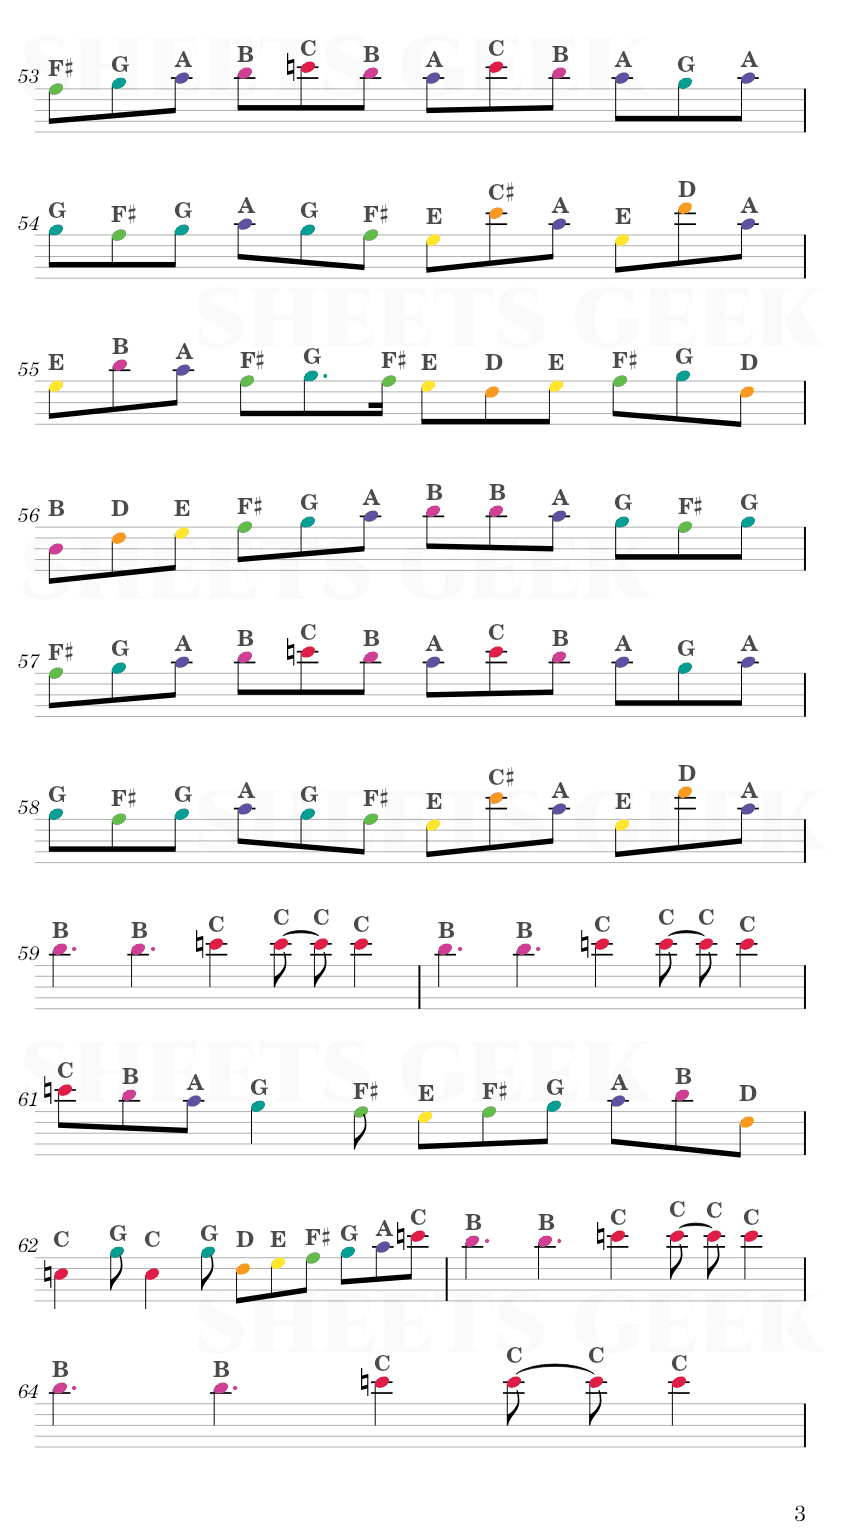 Riverdance Theme - Bill Whelan Easy Sheet Music Free for piano, keyboard, flute, violin, sax, cello page 3